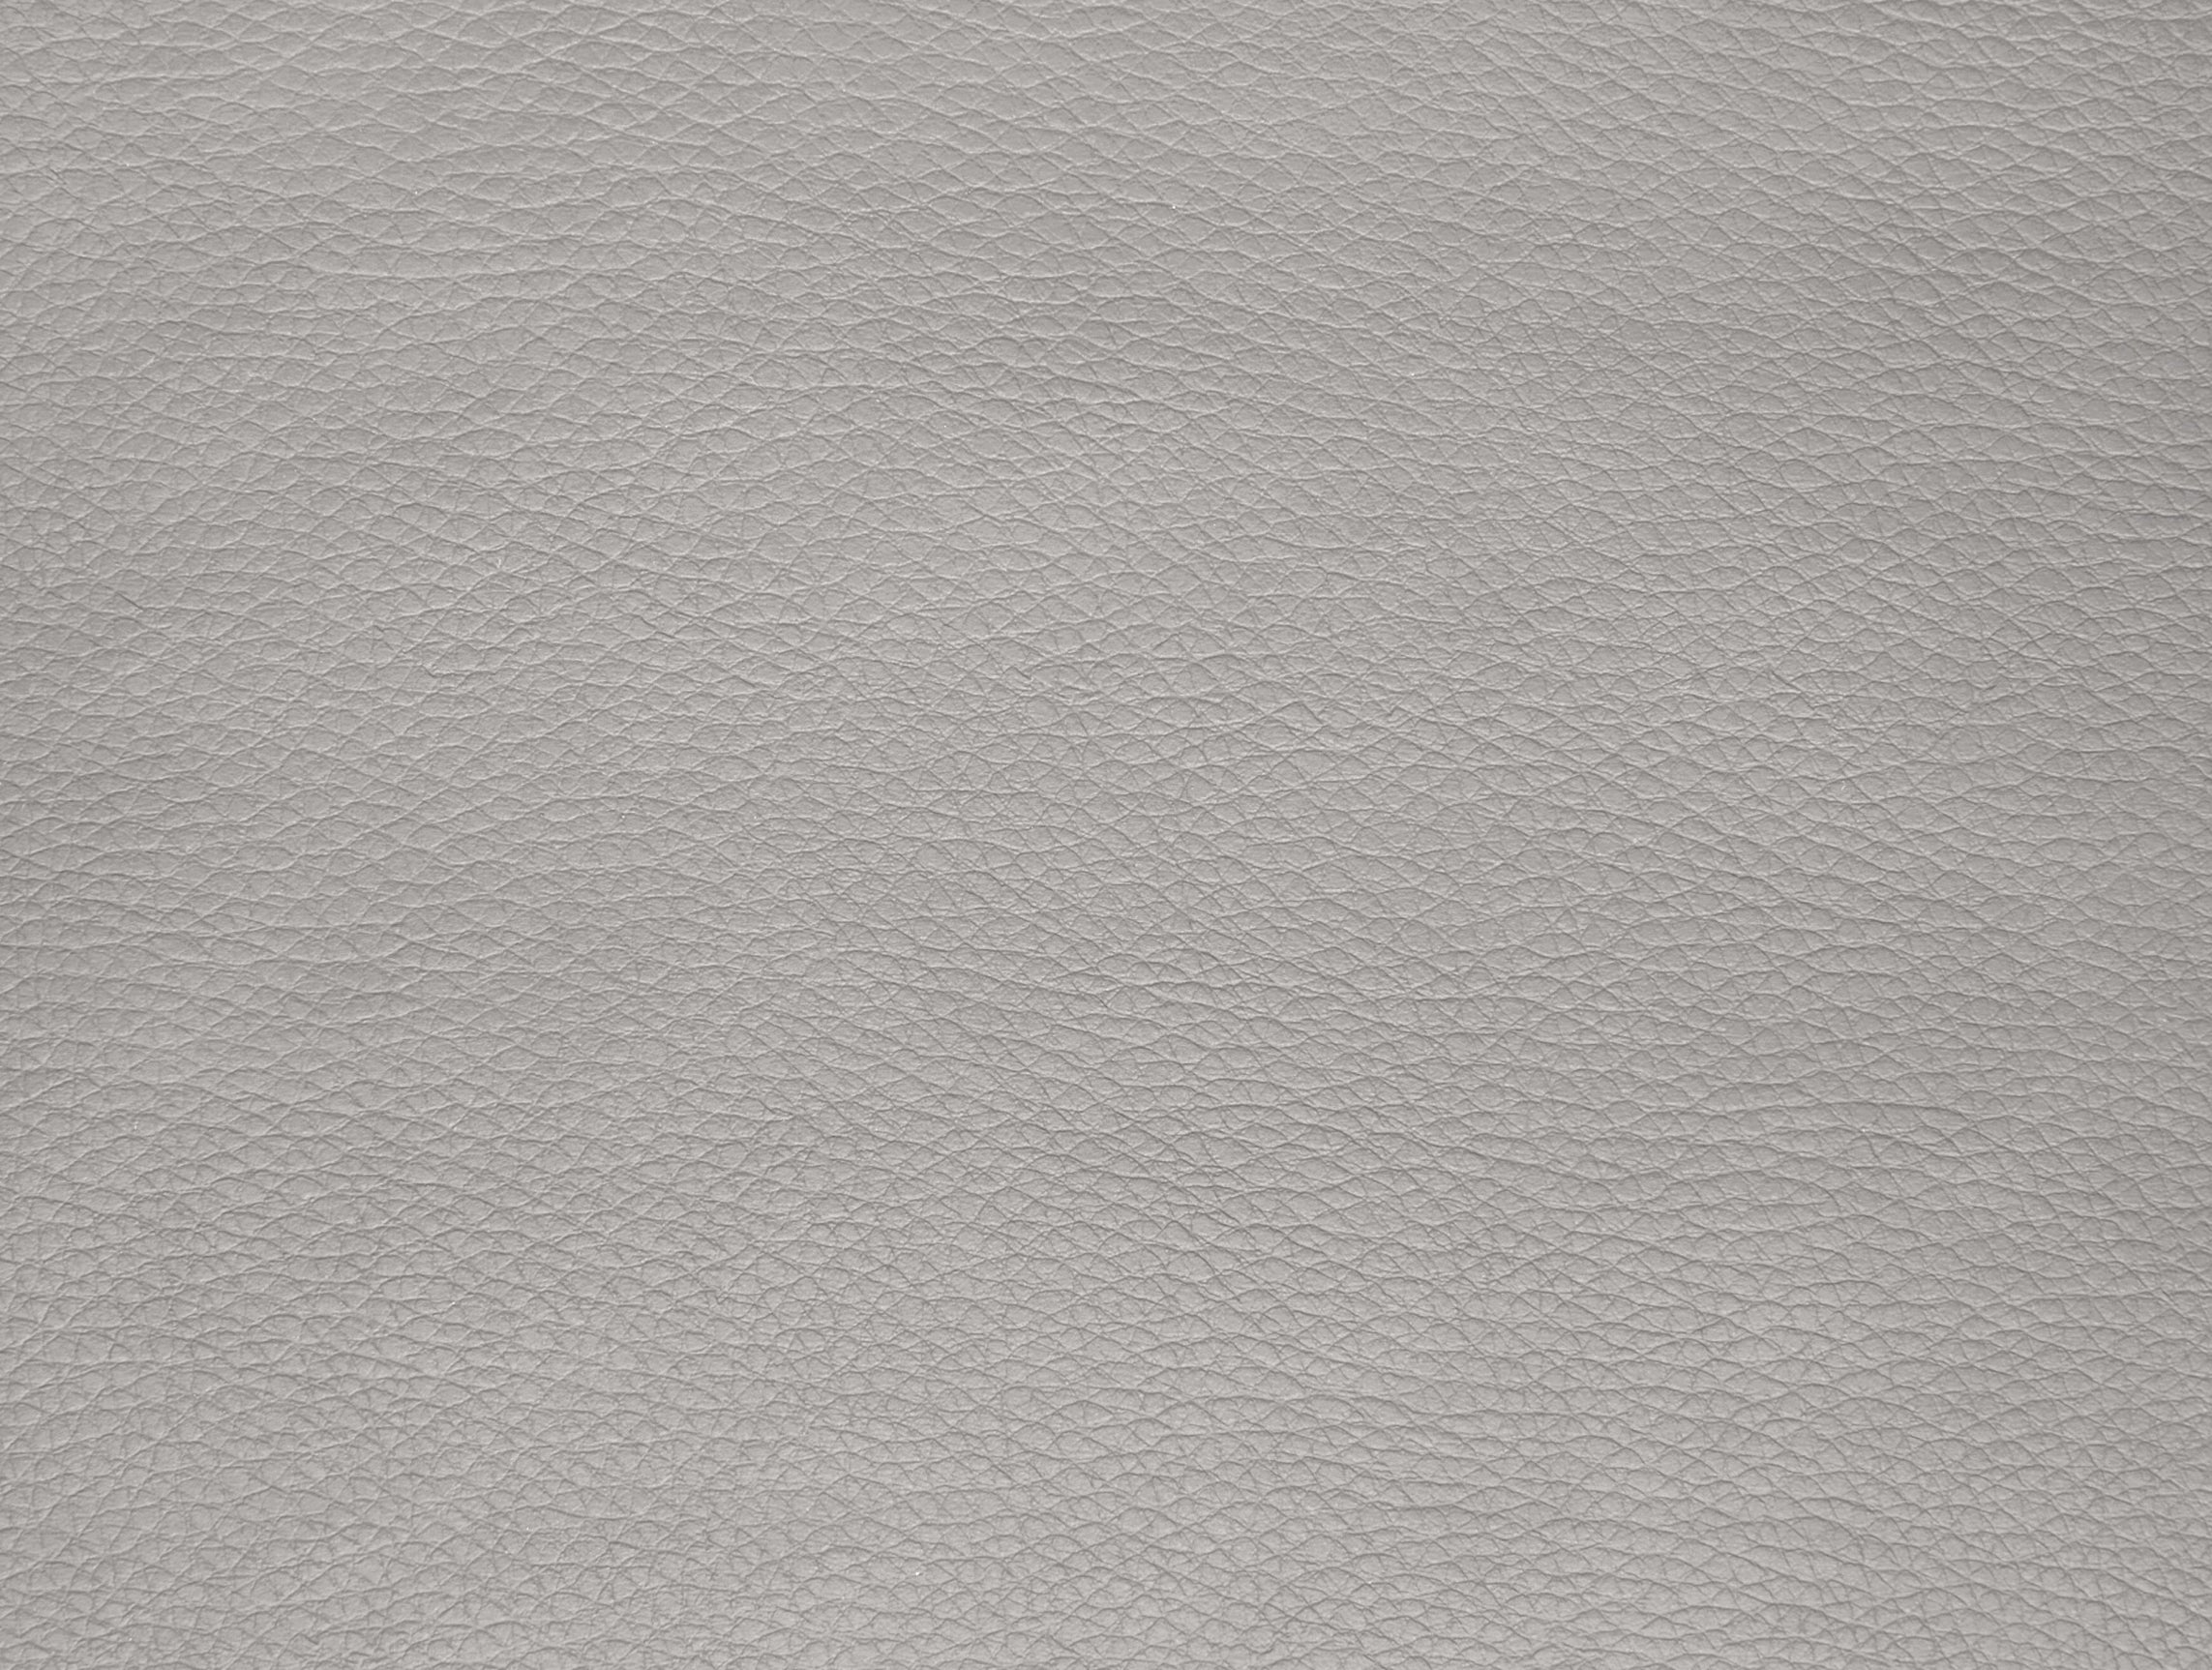 Technik-Leather in Technik-Leather in Stone image 1